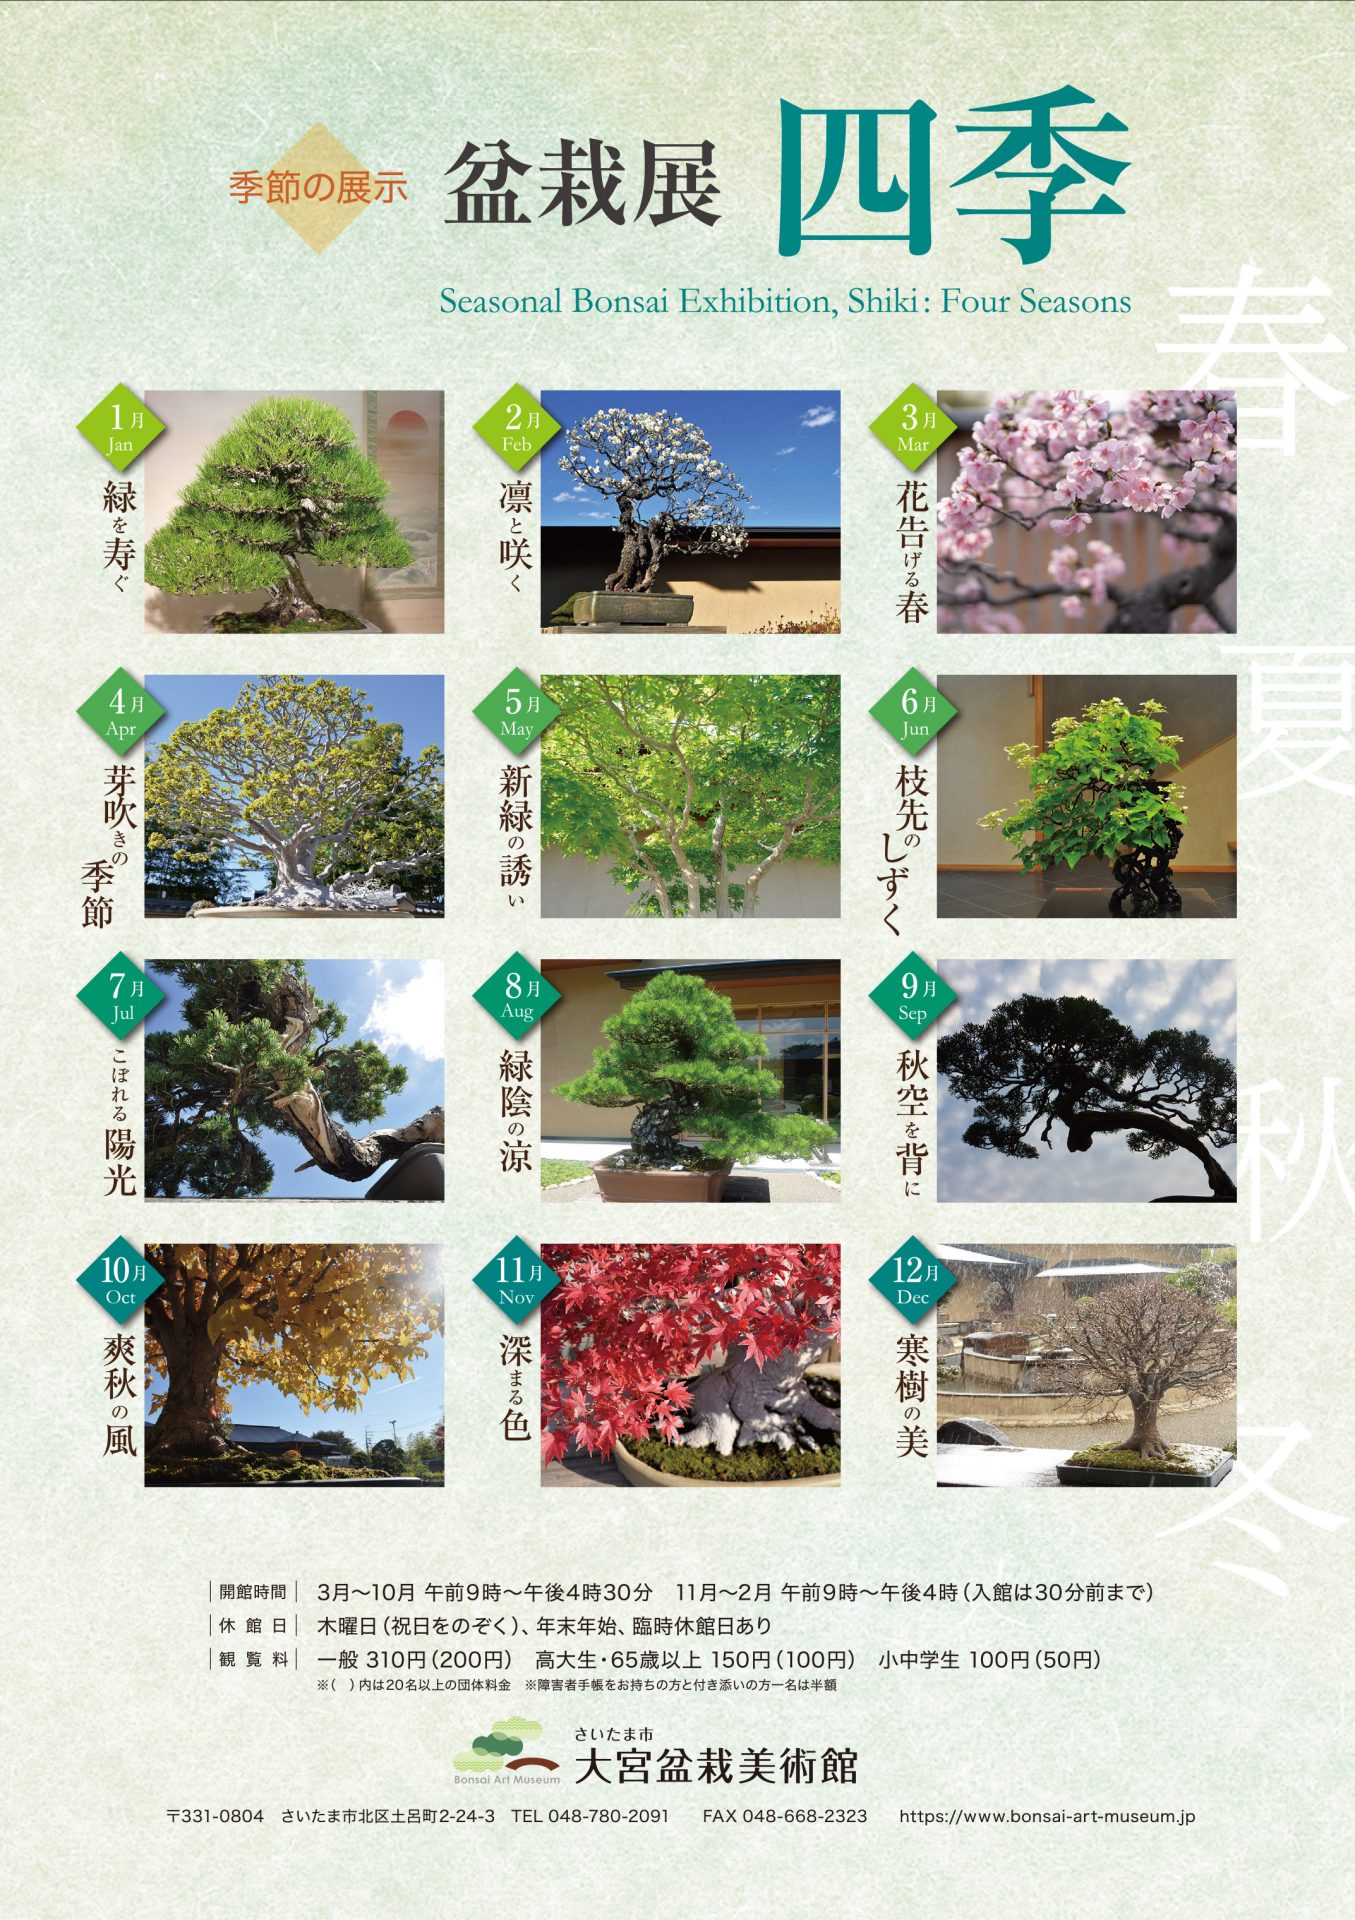 Seasonal Bonsai Exhibition, Shiki: Four Seasons, December, The Beauty of Winter Trees